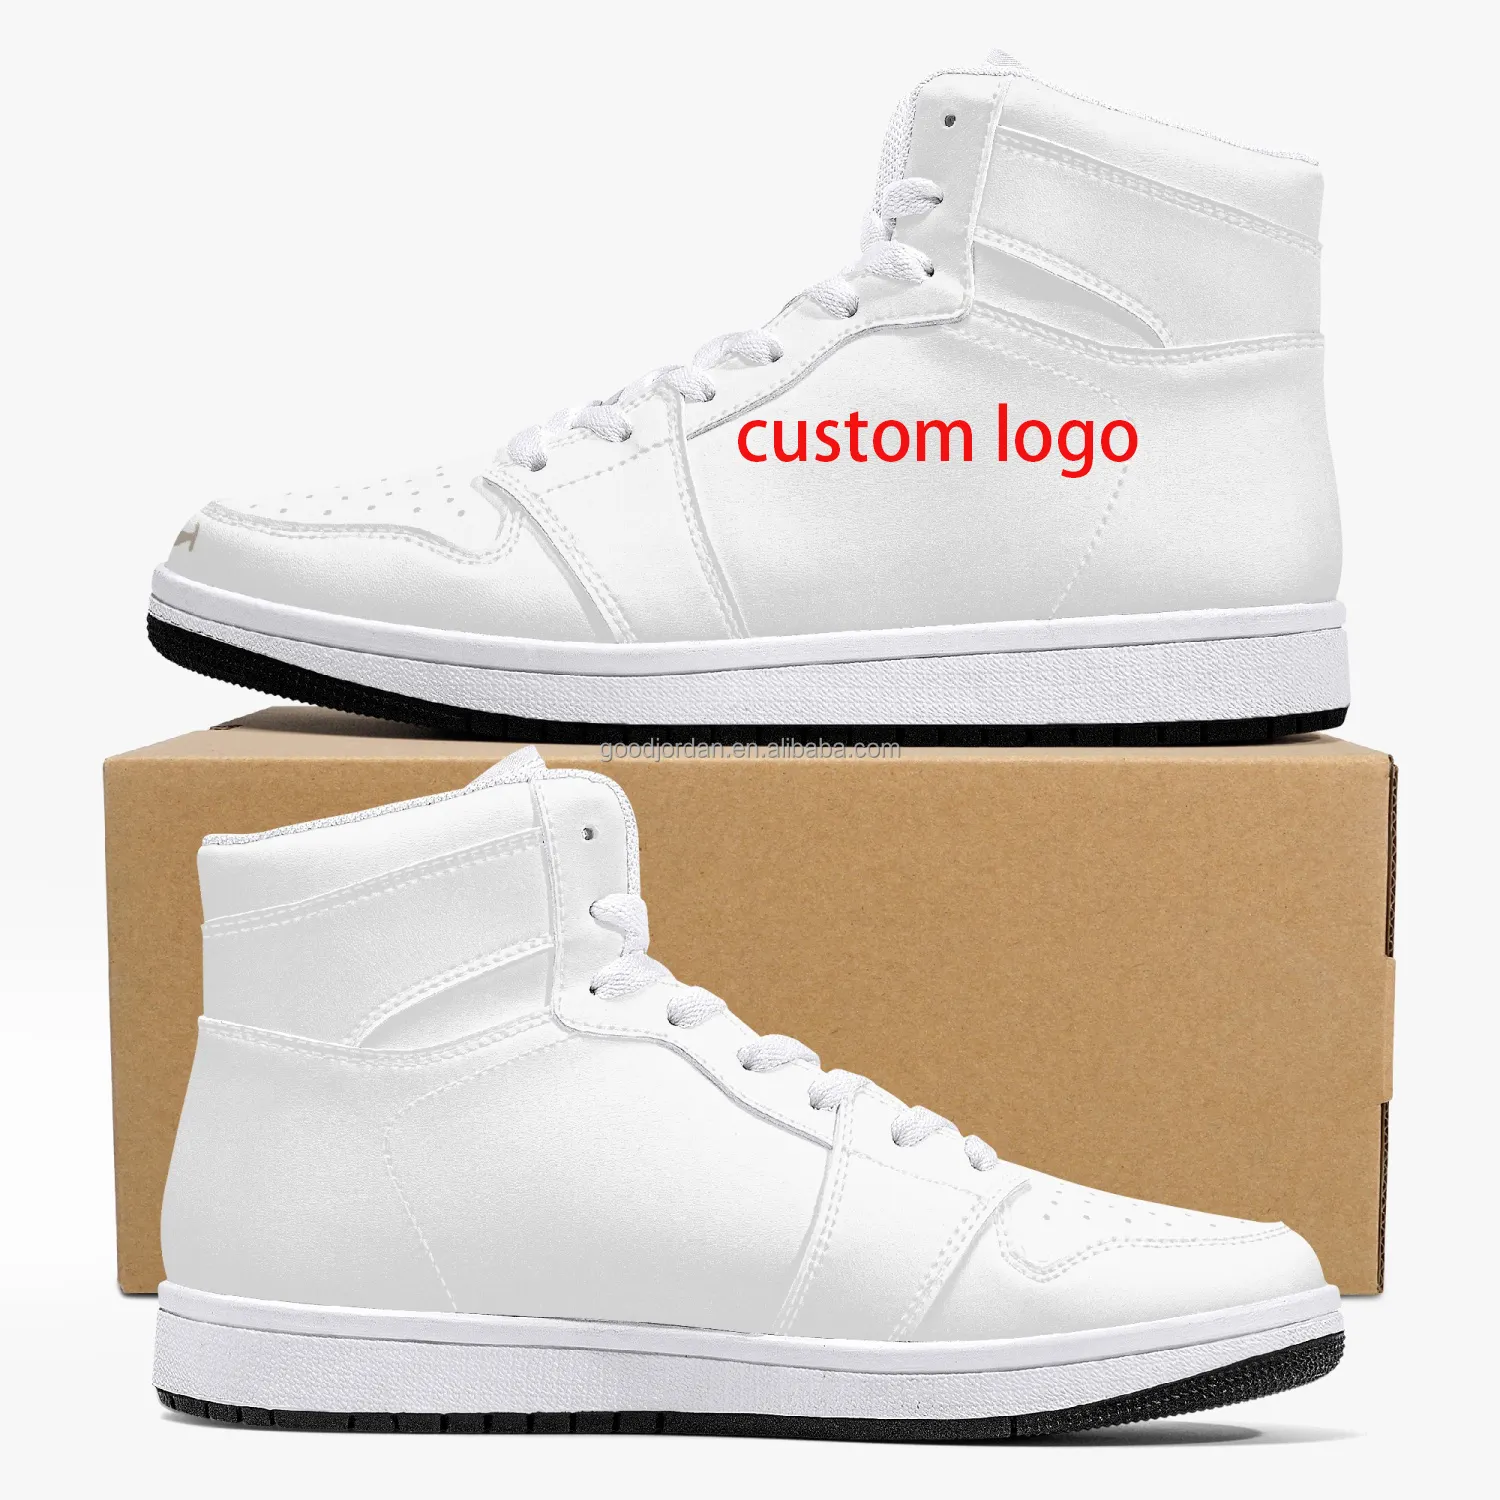 2021 Custom Design Logo Zapatos Sneaker Shoes White High fugazi green ljr Leather Oem Men's Fashion Sneakers